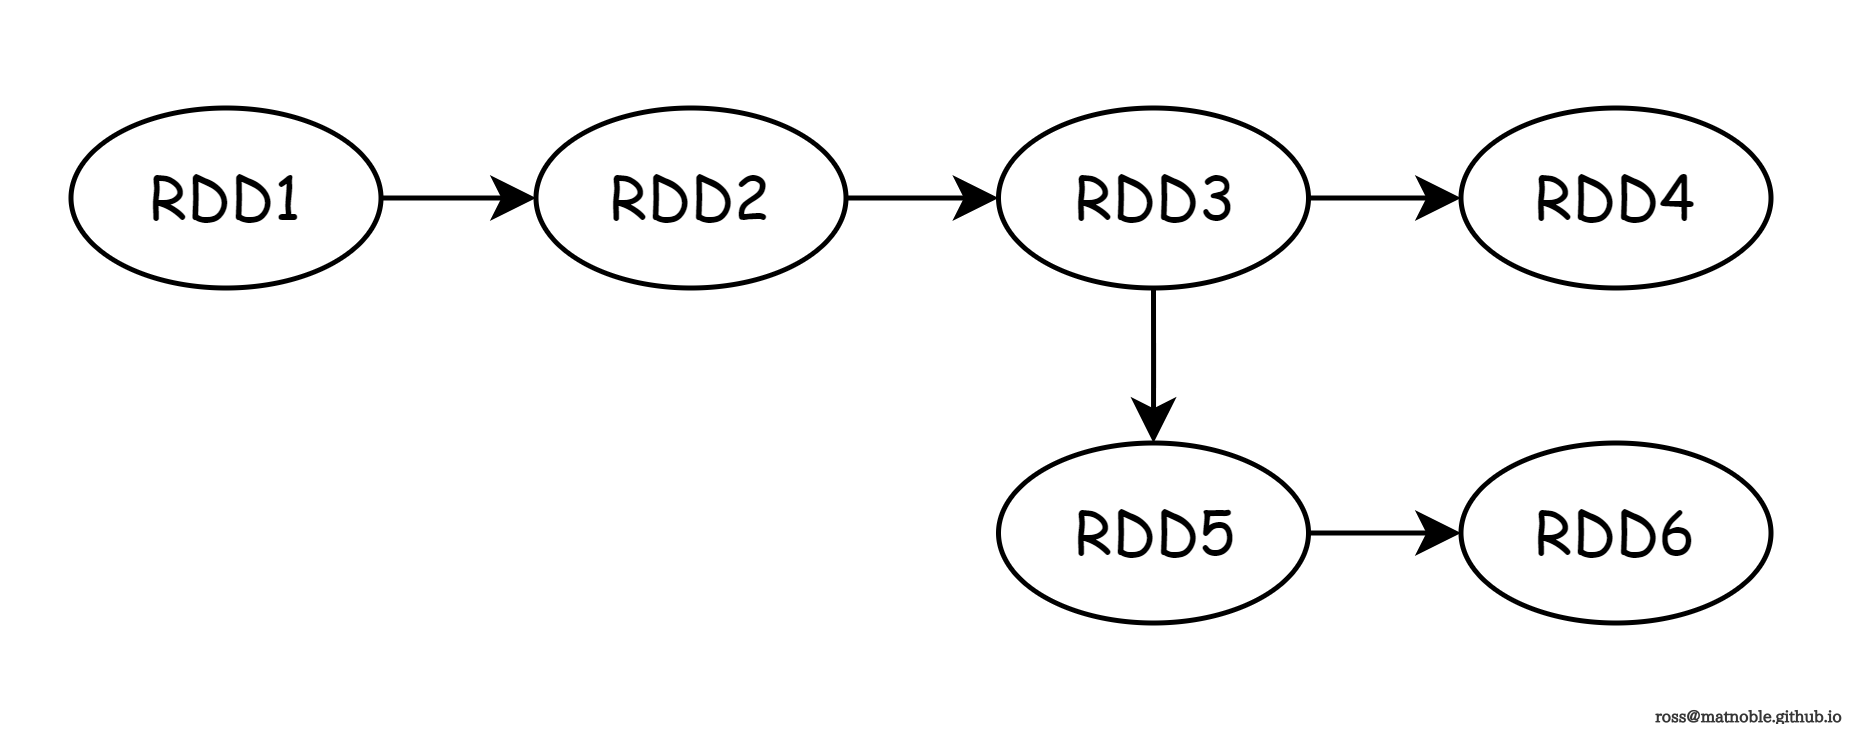 Spark RDD 间的依赖链条